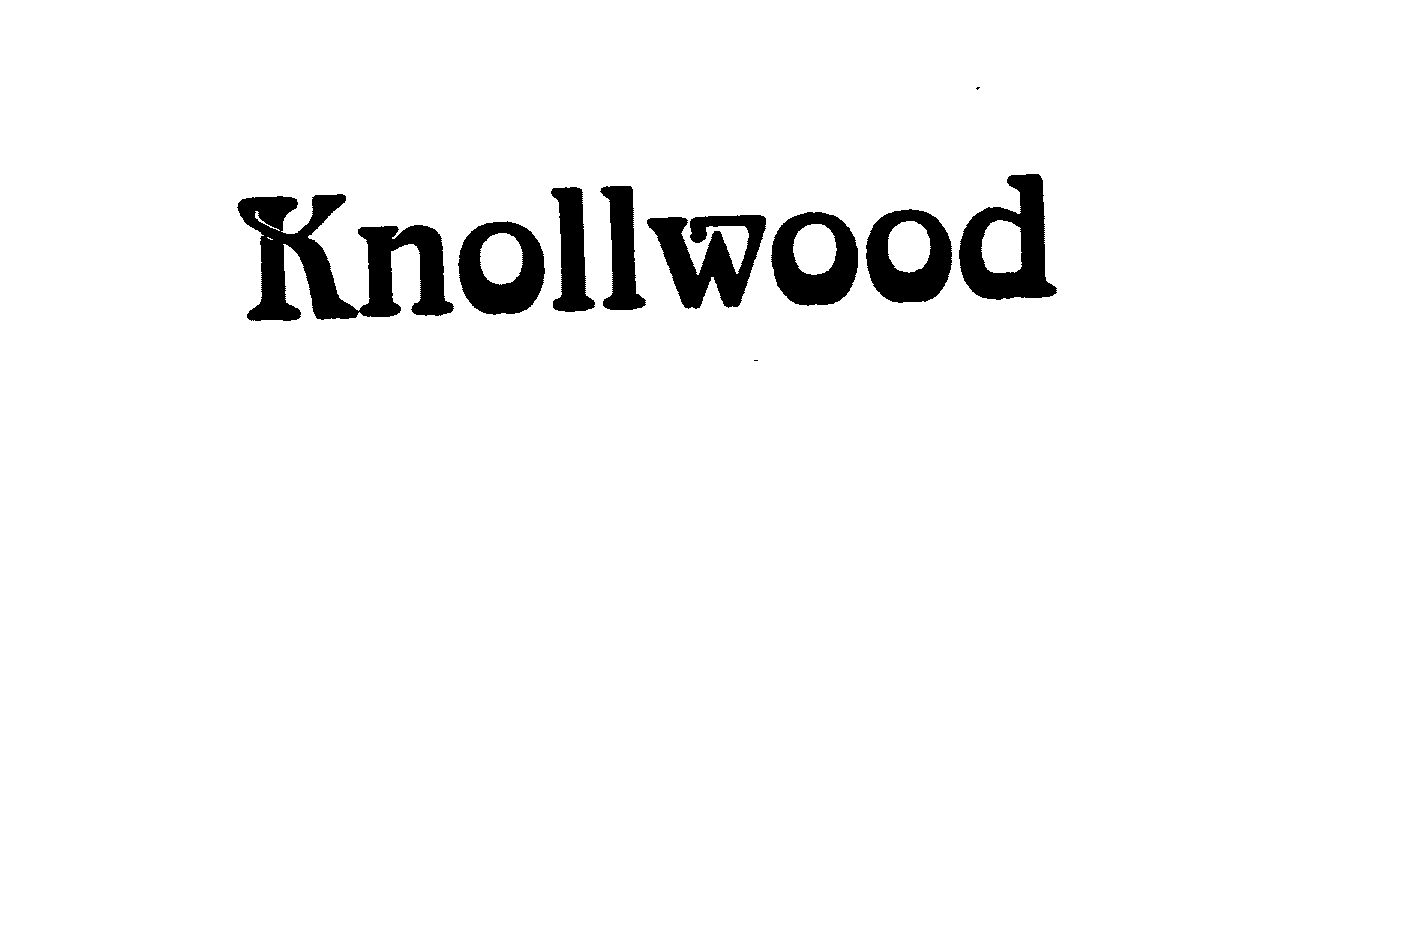 Trademark Logo KNOLLWOOD